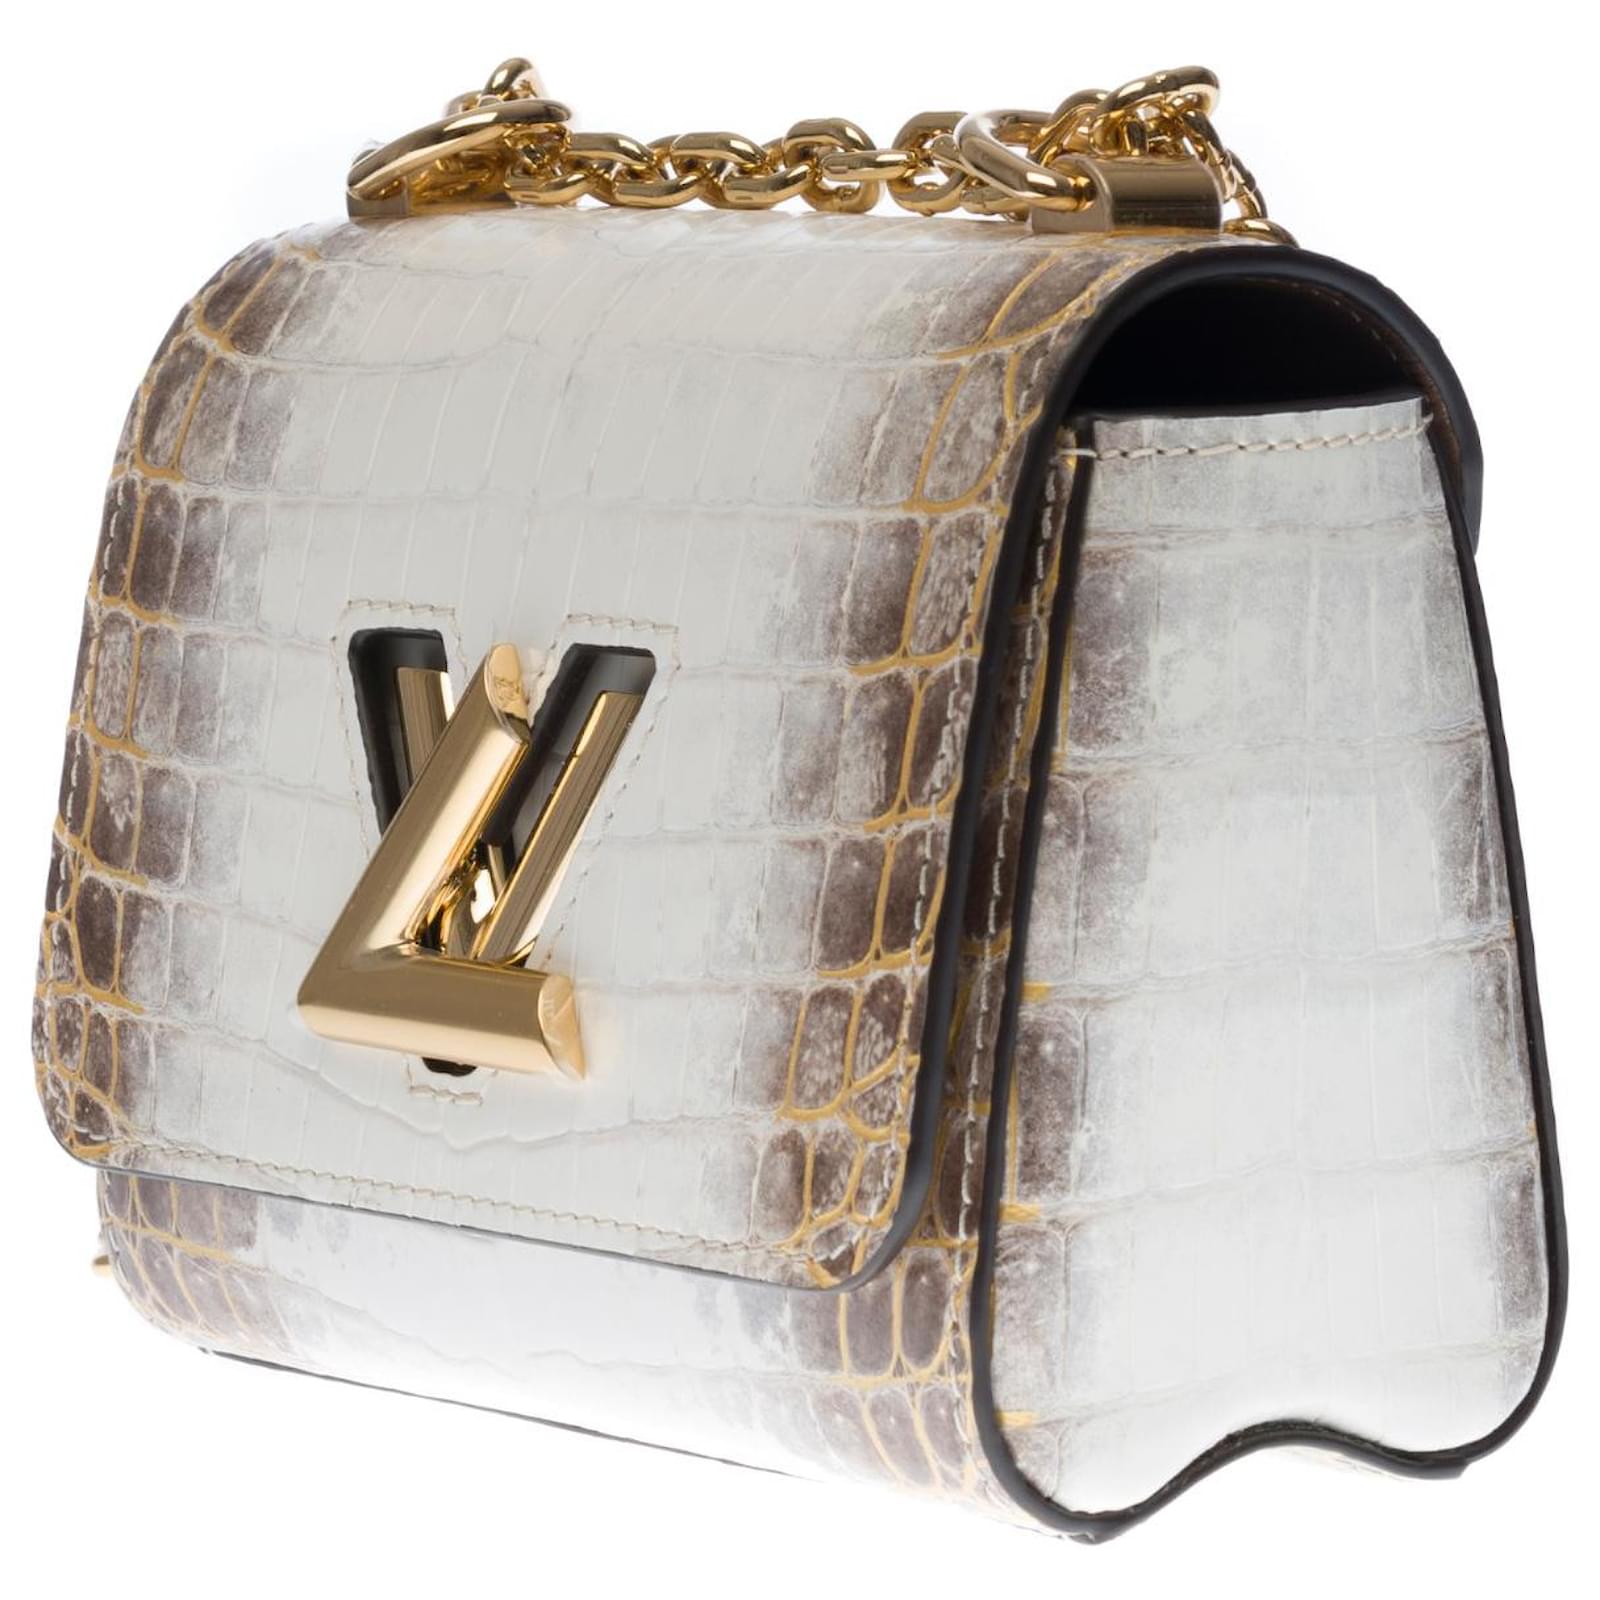 Exceptional and precious Louis Vuitton Twist Mini bag in white